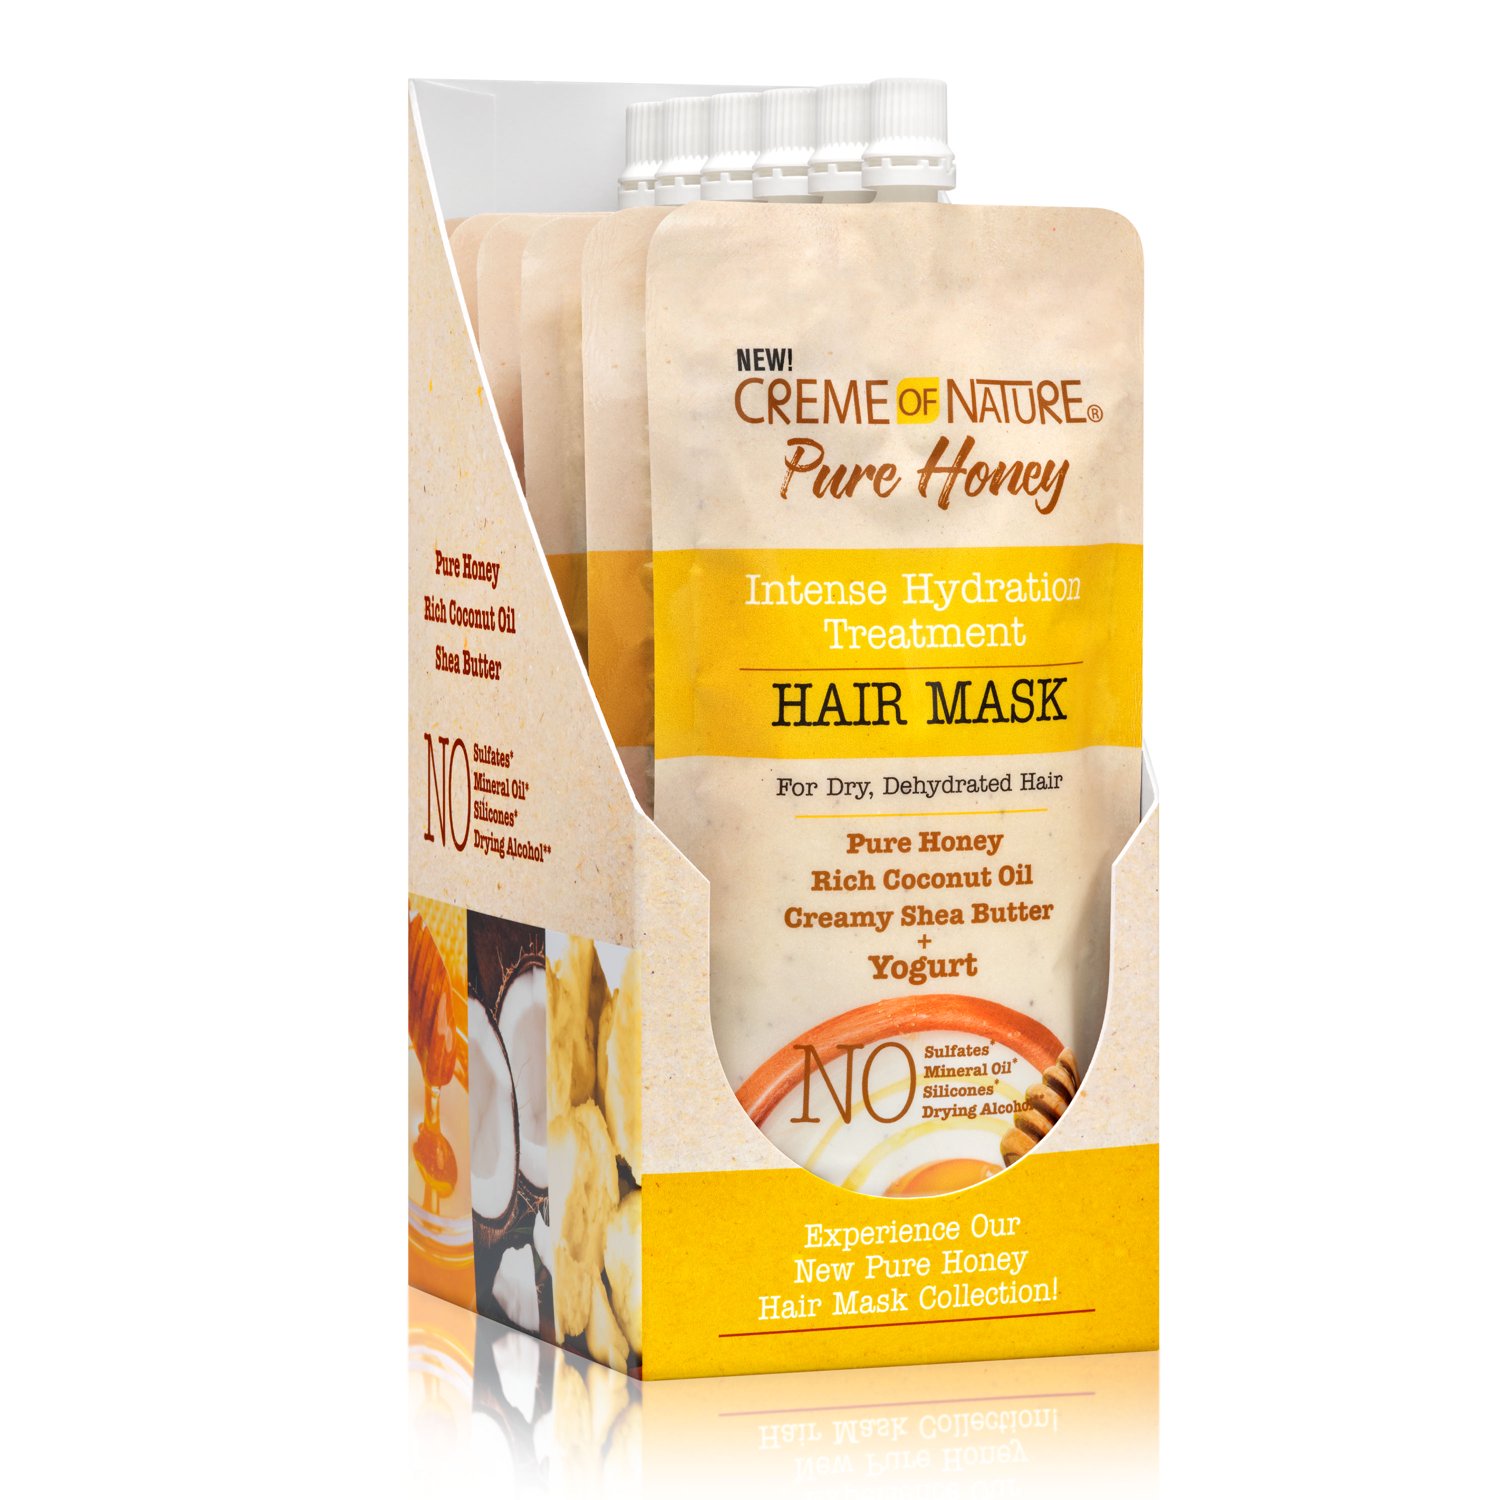 Creme of Nature Pure Honey Intense Hydration Treatment Hair Mask, 3.4 oz - image 3 of 8